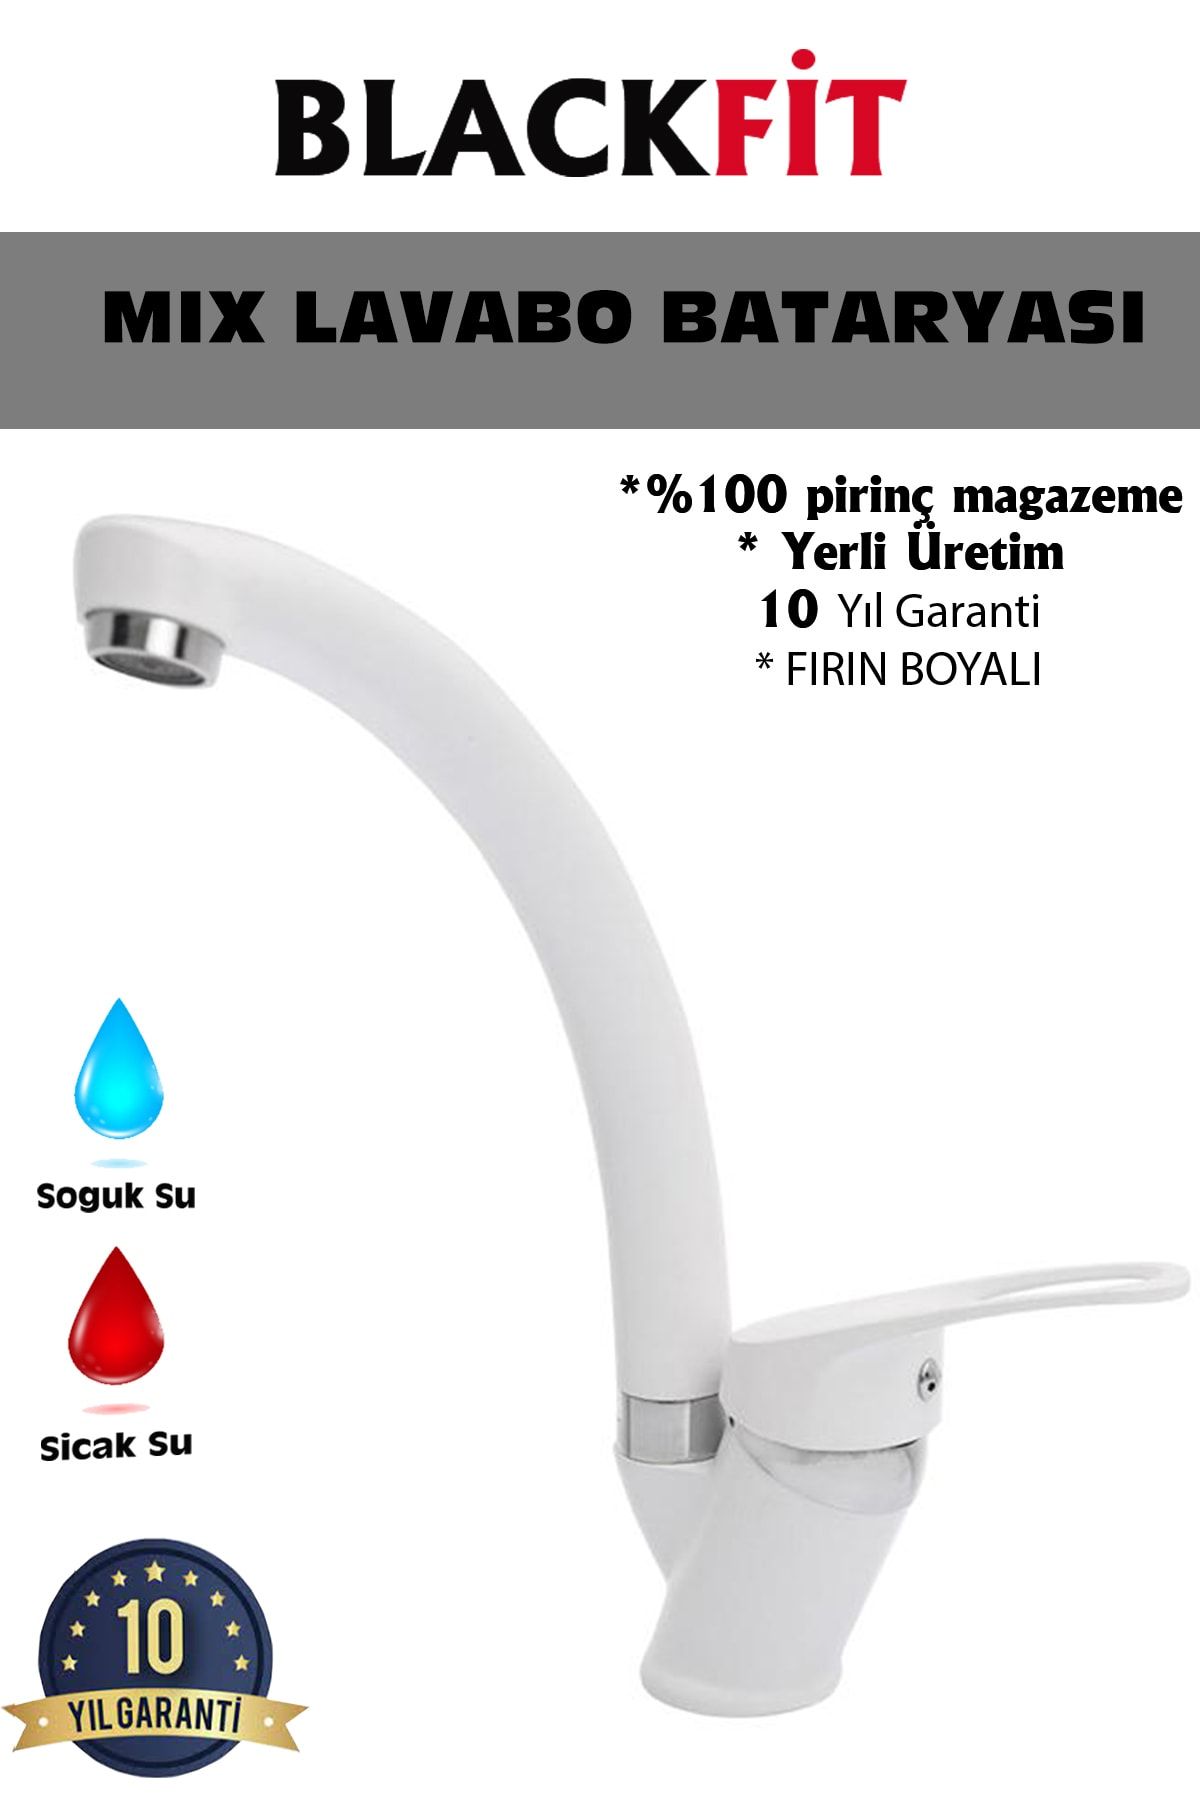 BlackFit Beyaz Mix Lavabo Bataryası Çift Su Girişli Aç Kapa Banyo Bataryası